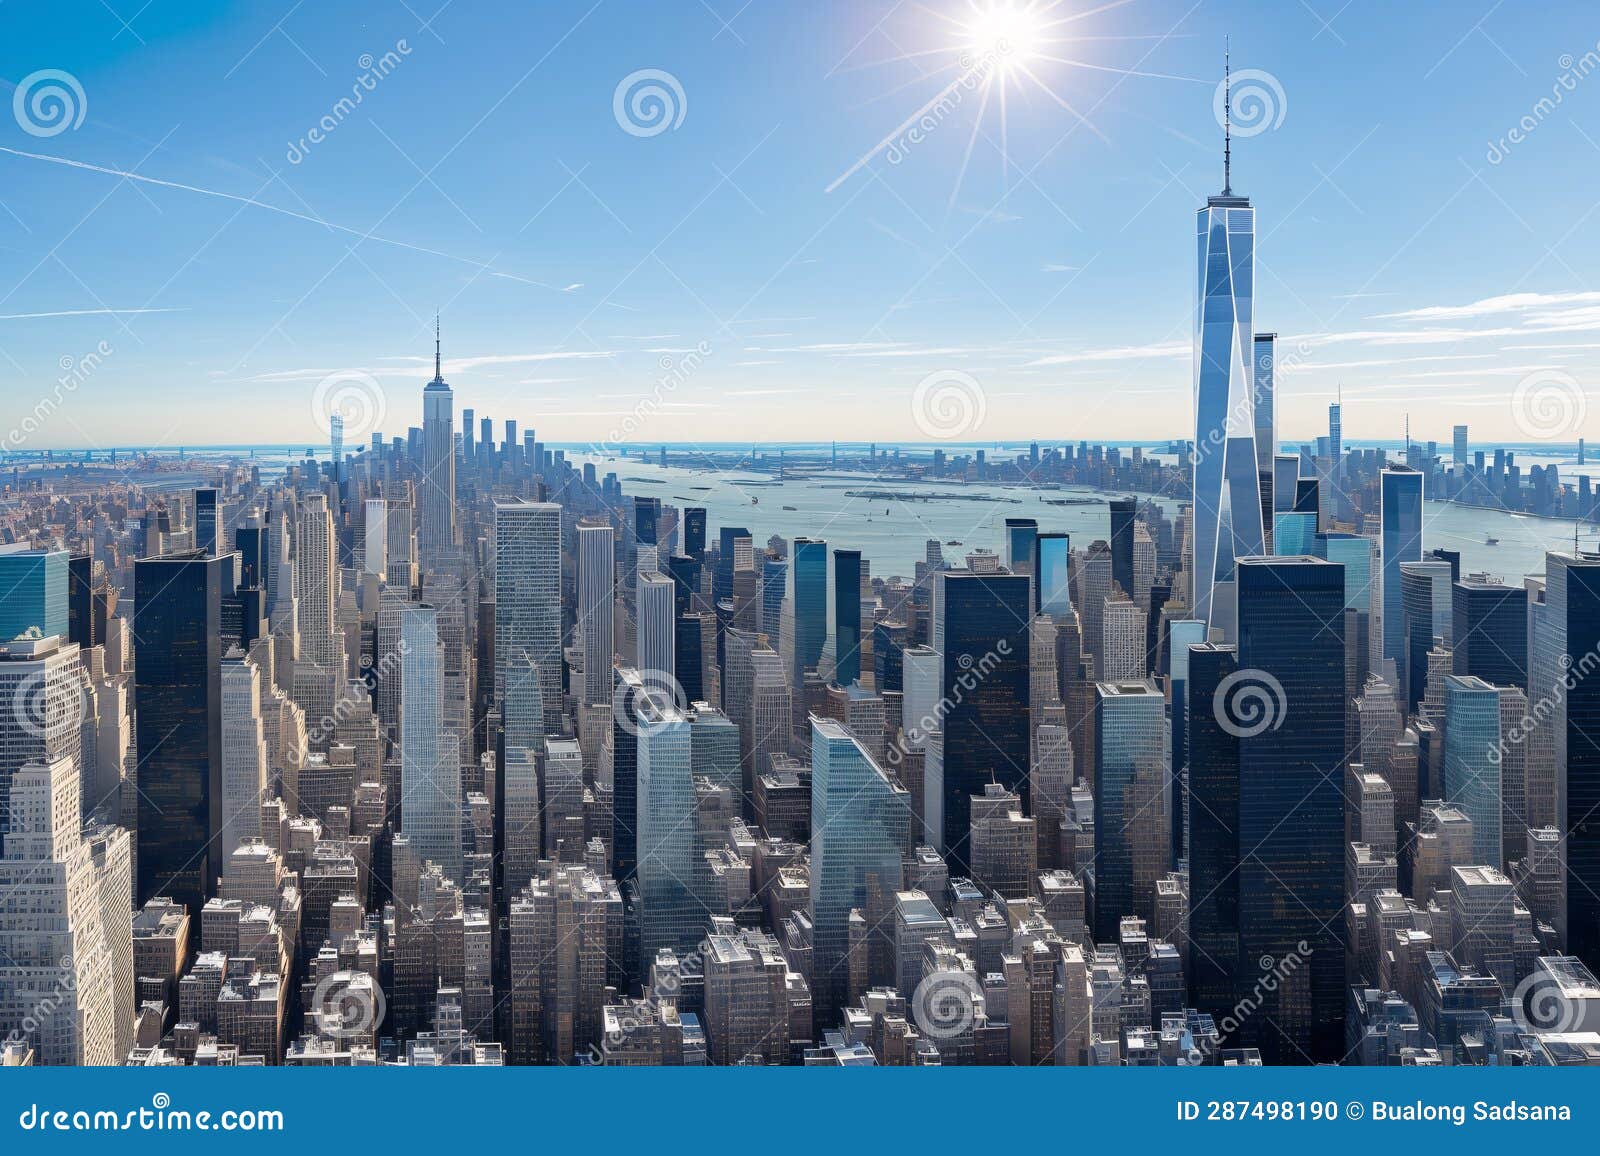 new-york city, united states - 21 : the modern sky scraper.